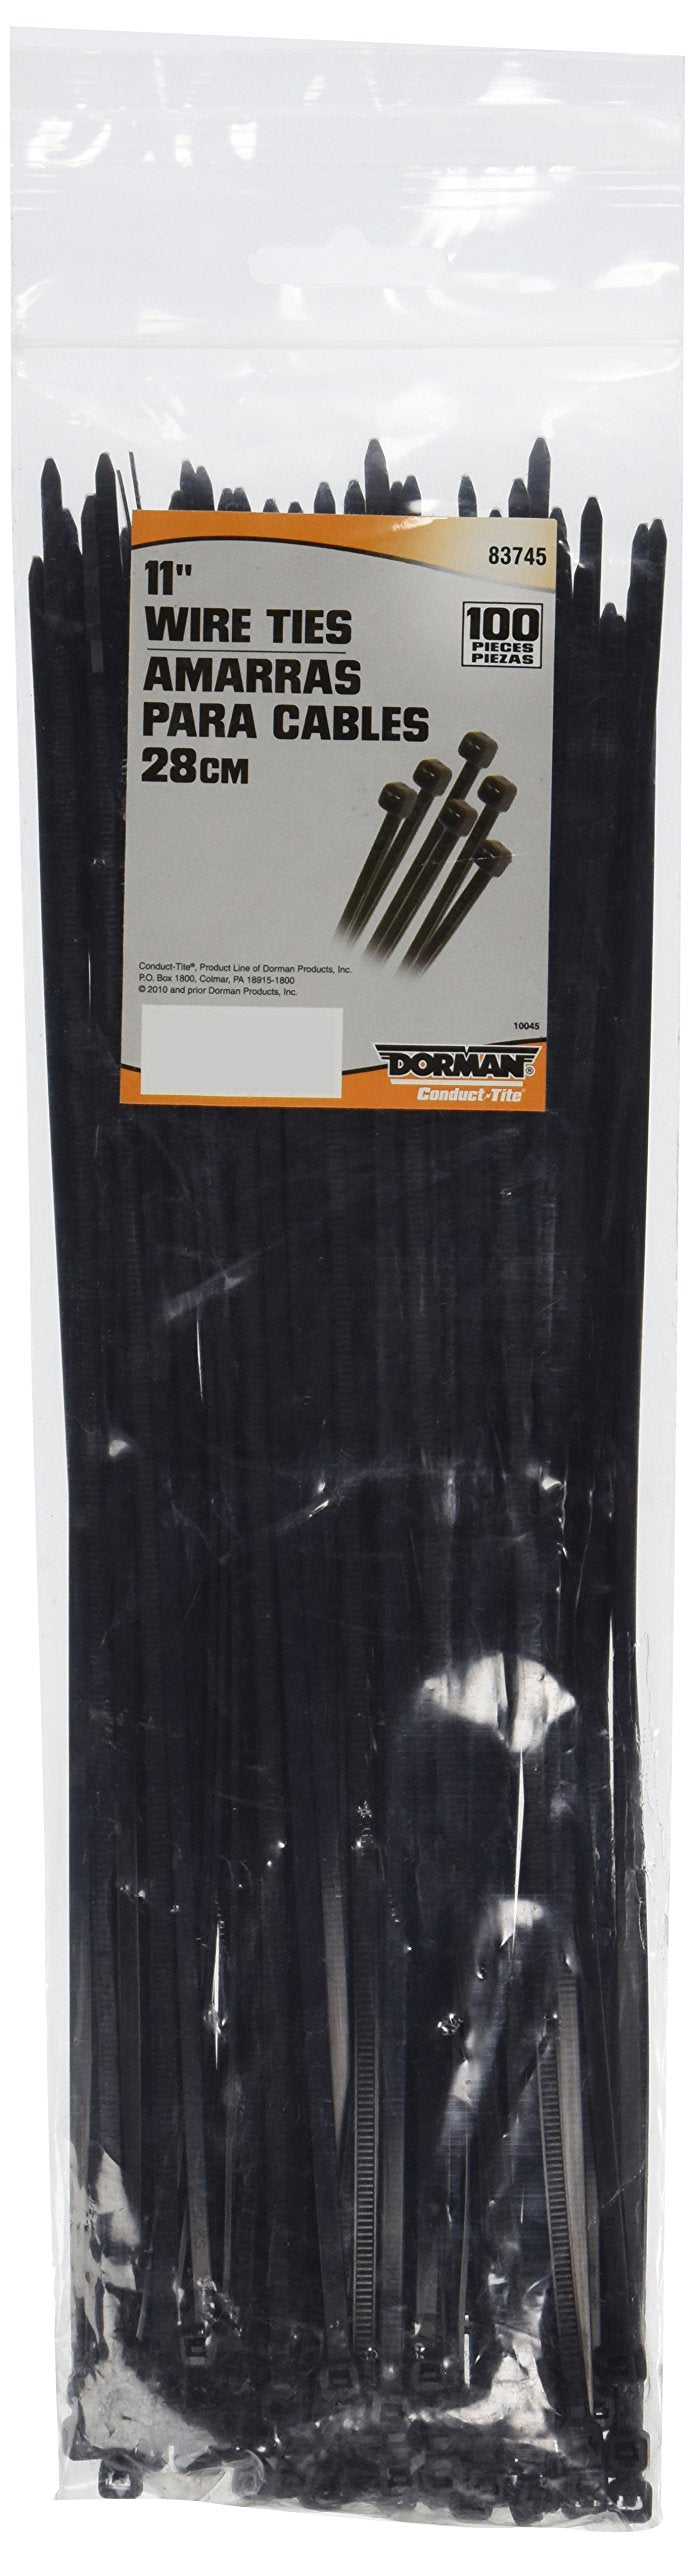 Dorman 83745 11" Electrical Wire Tie , Black